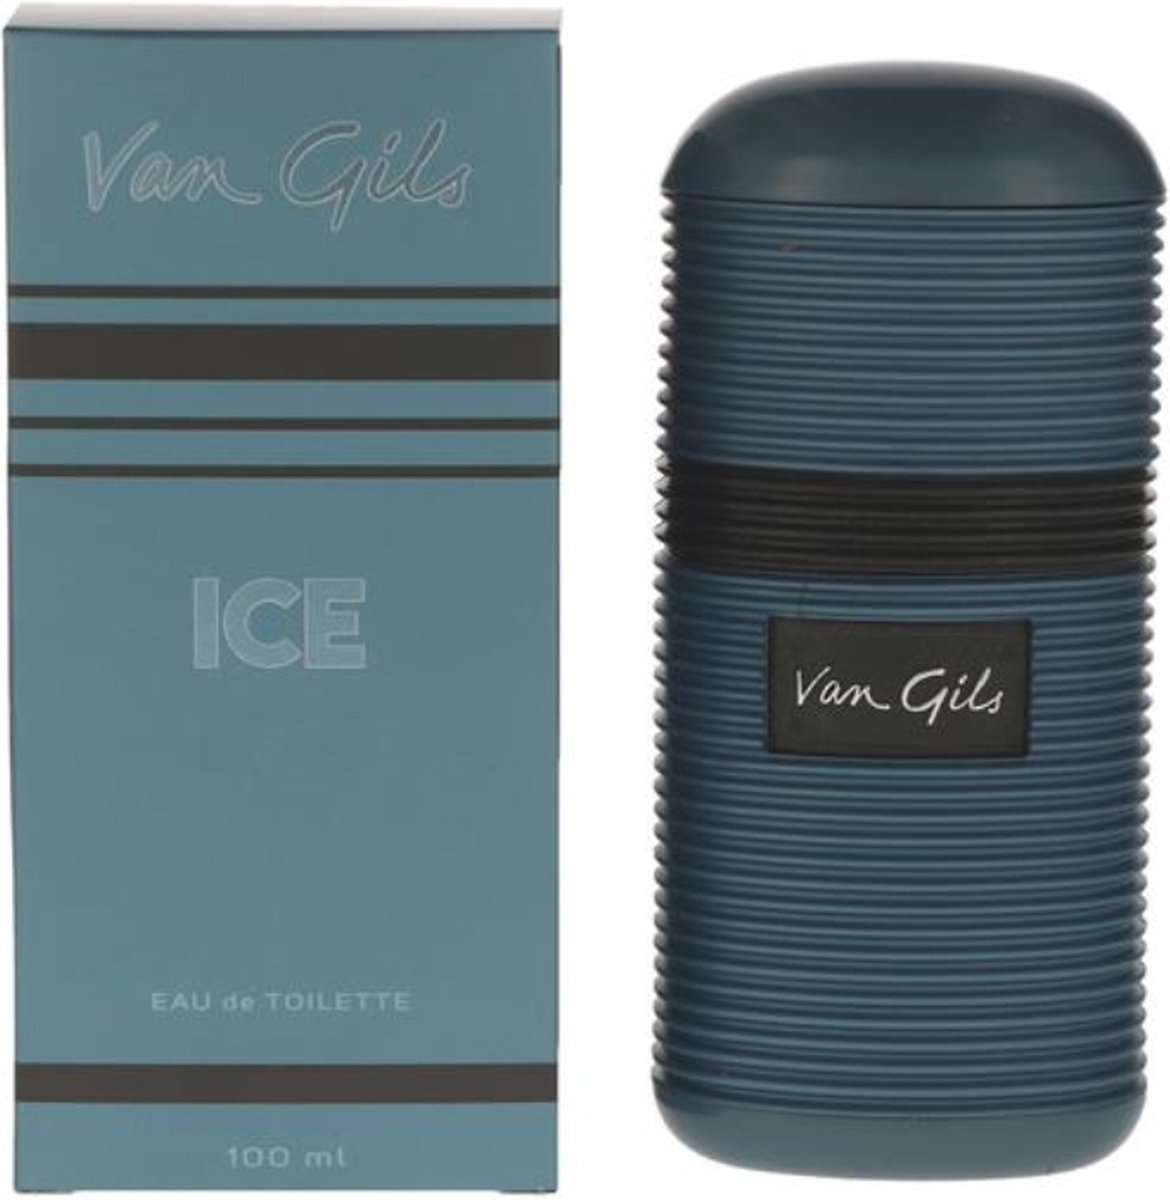 VAN GILS ICE EDT 100 ML | bol.com